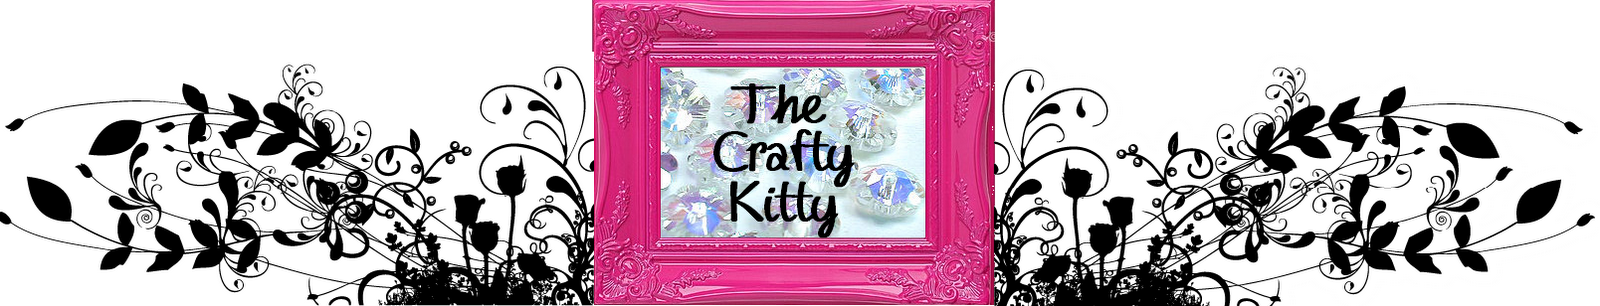 The Crafty Kitty